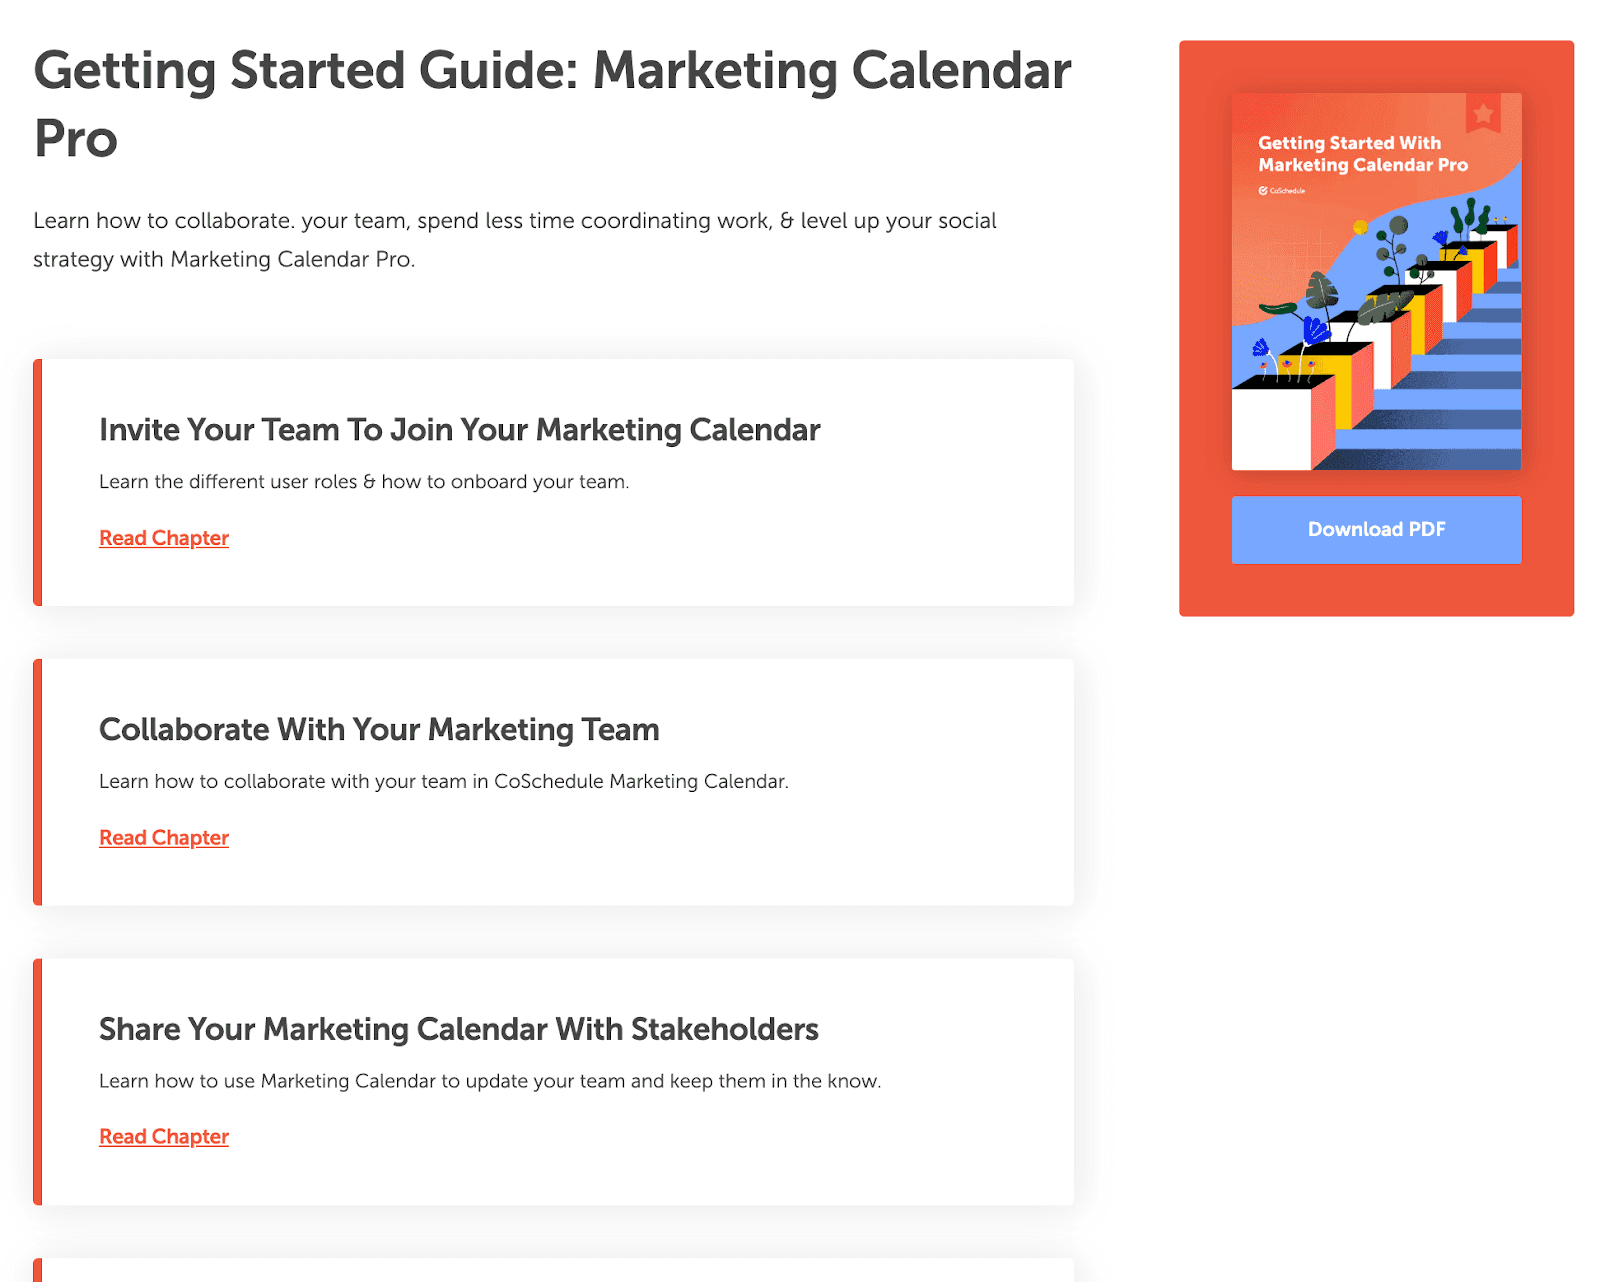 Get started guide marketing calendar pro